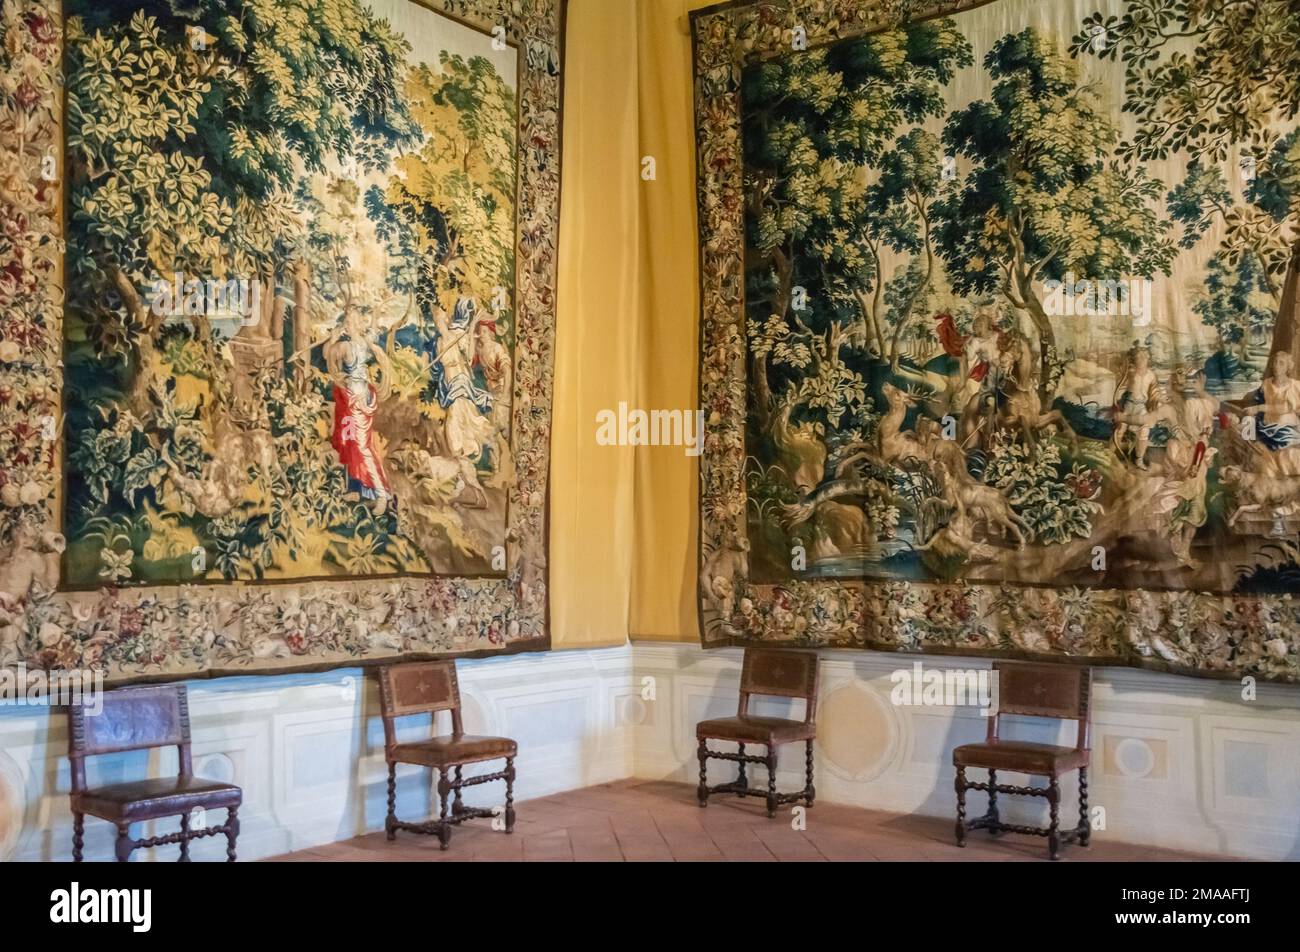 The inside of the Palace of Venaria (Italian: Reggia di Venaria